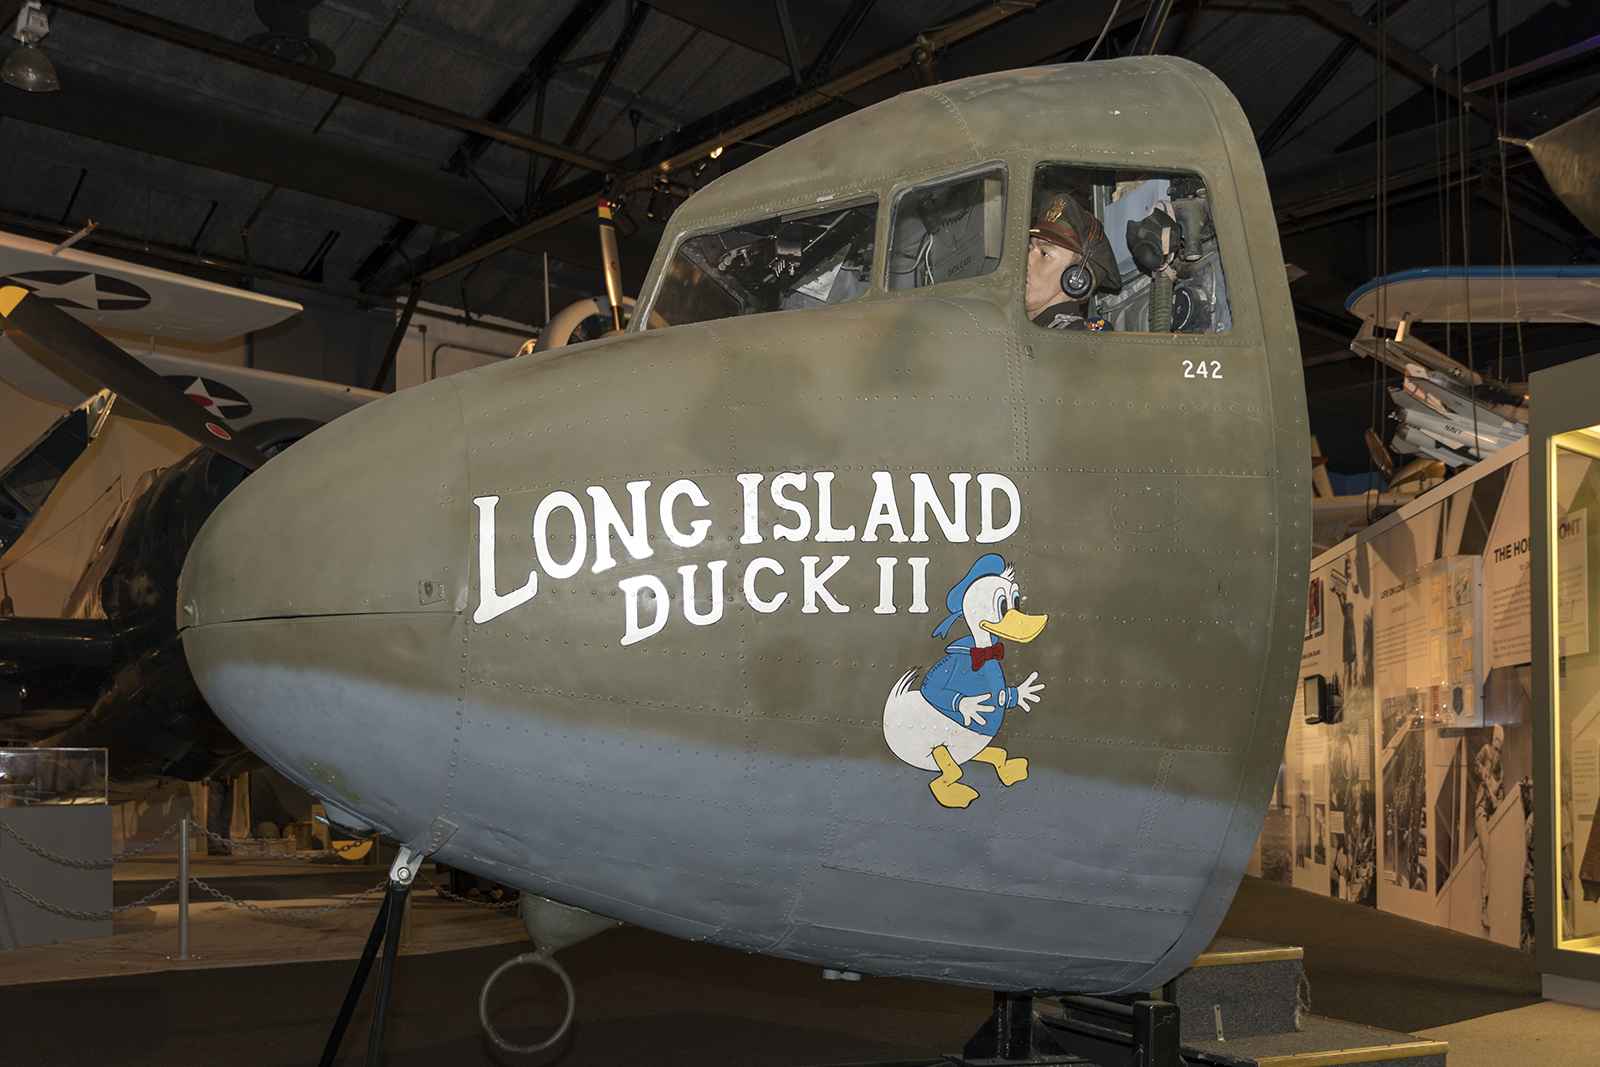 Douglas C 47b Skytrain Aviationmuseum